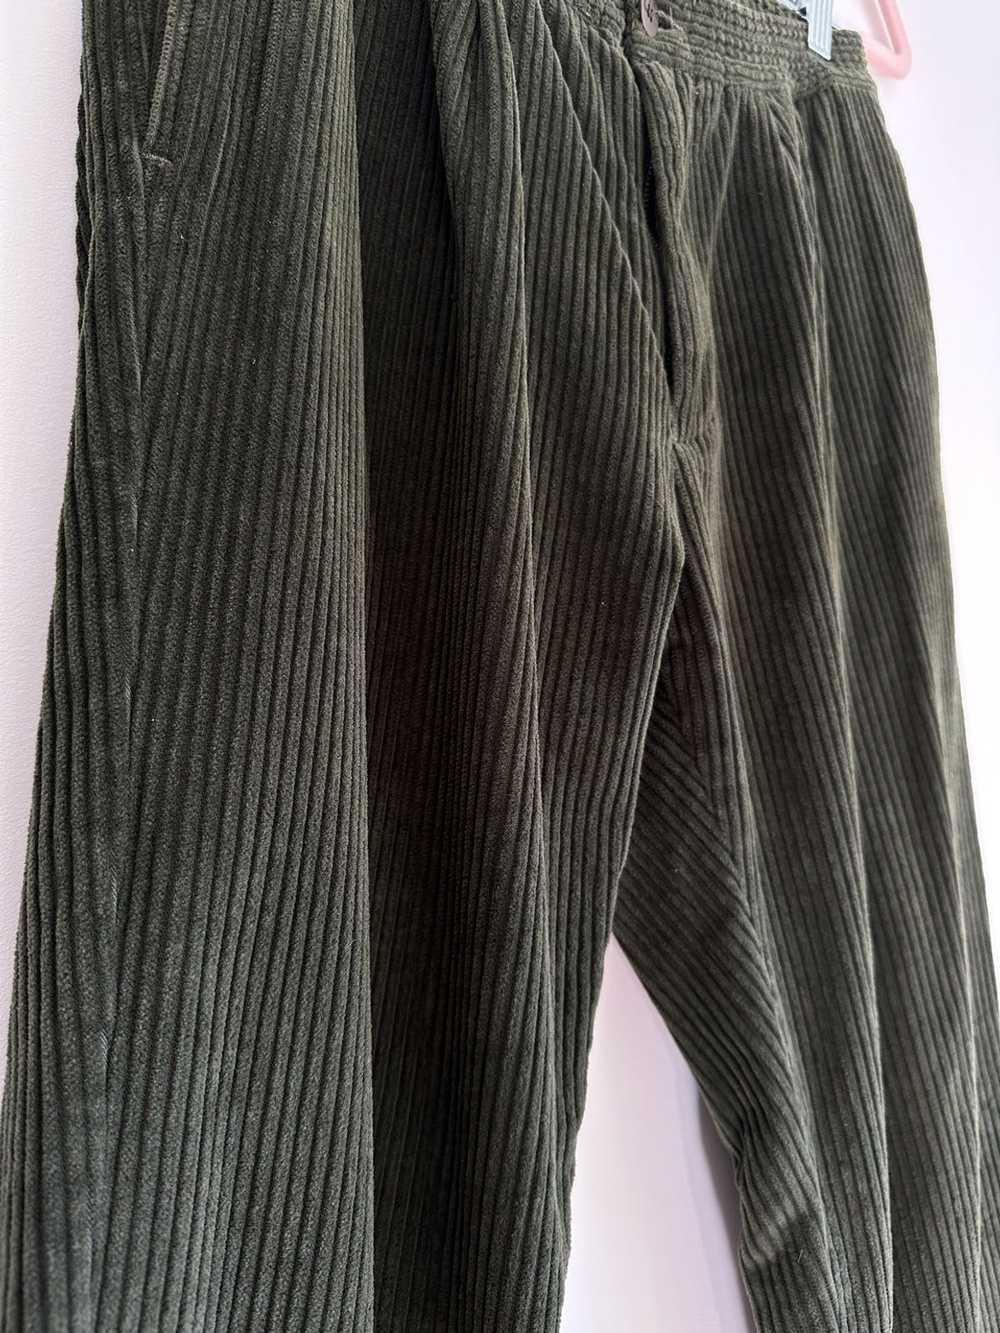 Paa PAA Green Corduroy Trousers - image 3